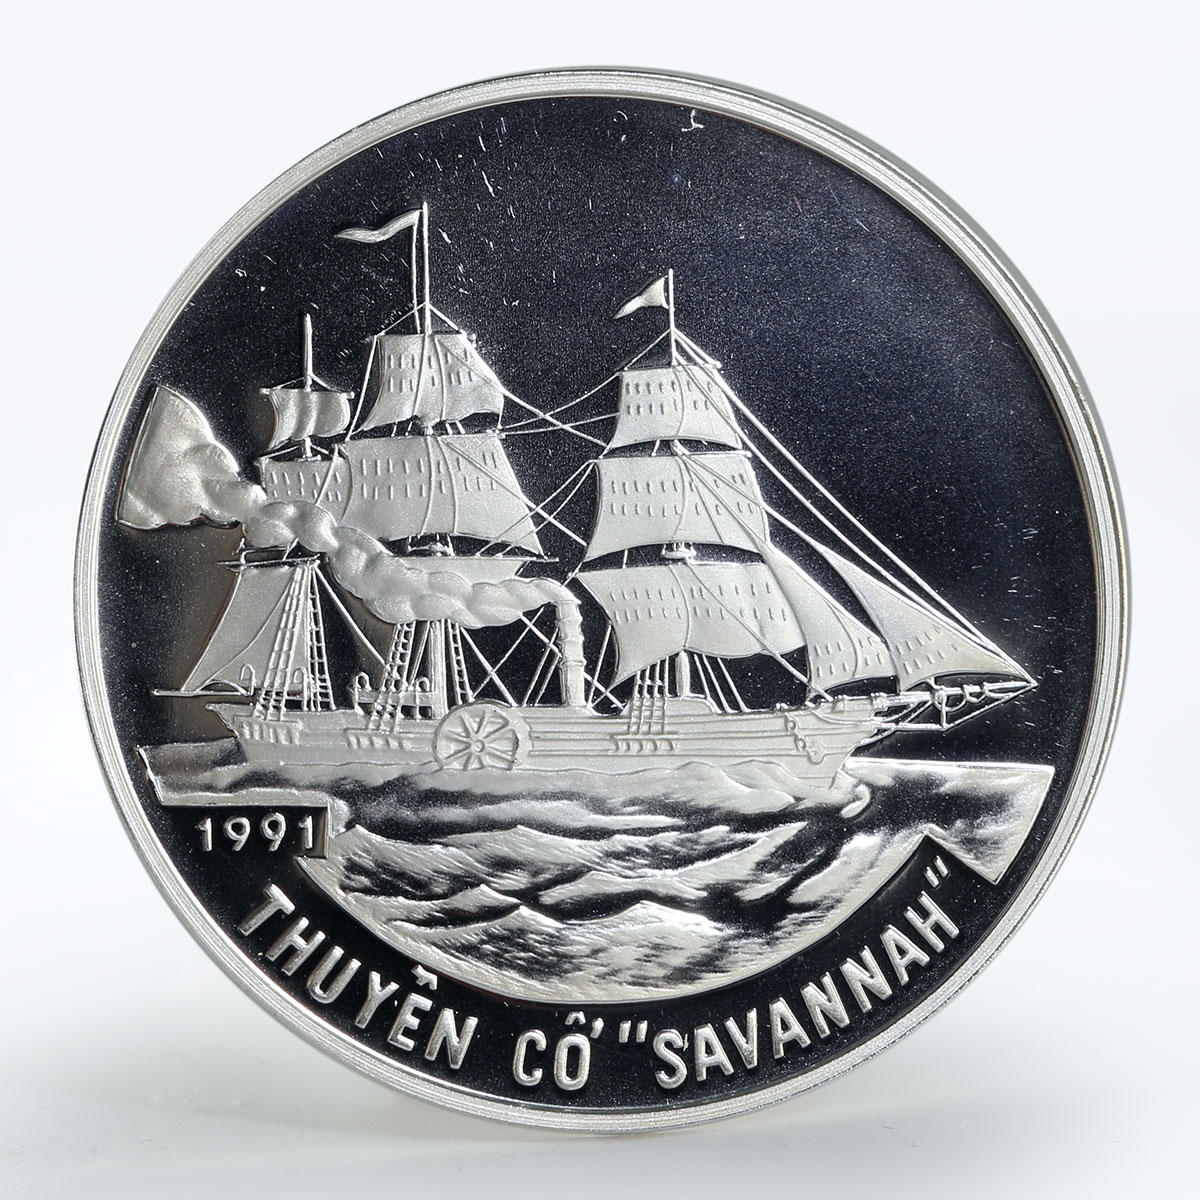 Vietnam 100 dong Boats of the World Savannah ship proof silver coin 1991